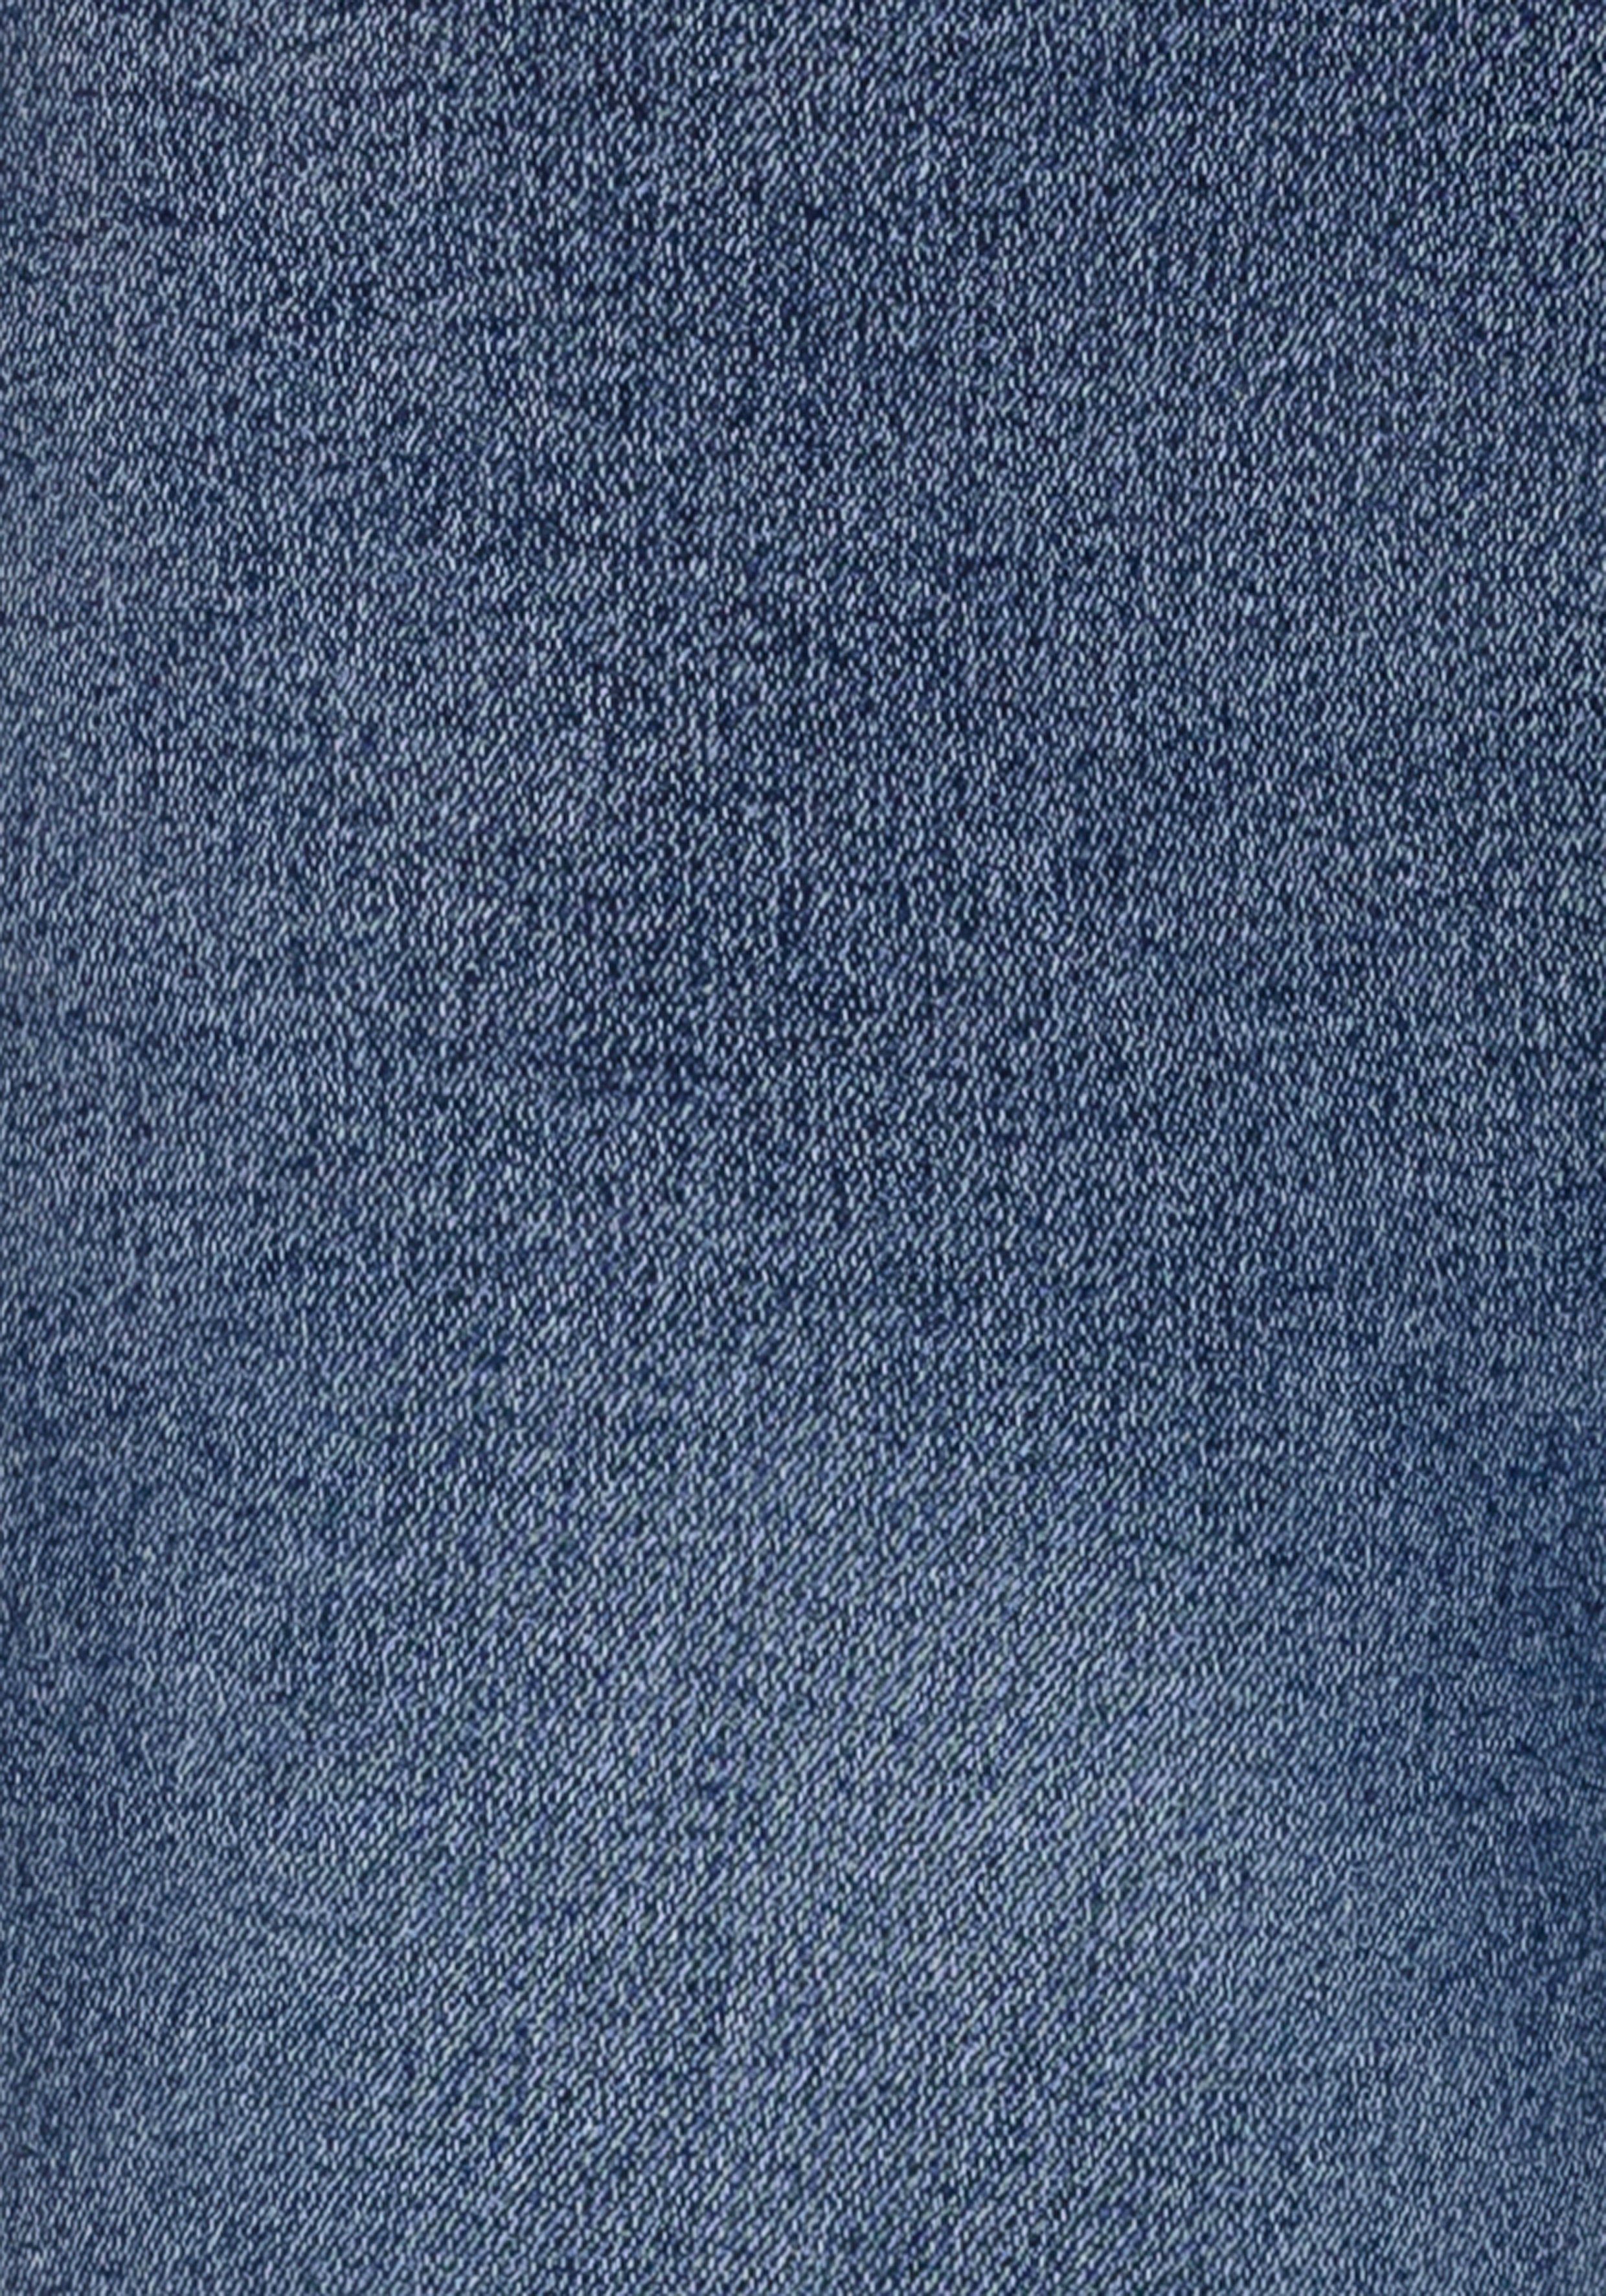 Waist blue-used High Ultra Skinny-fit-Jeans Arizona Stretch